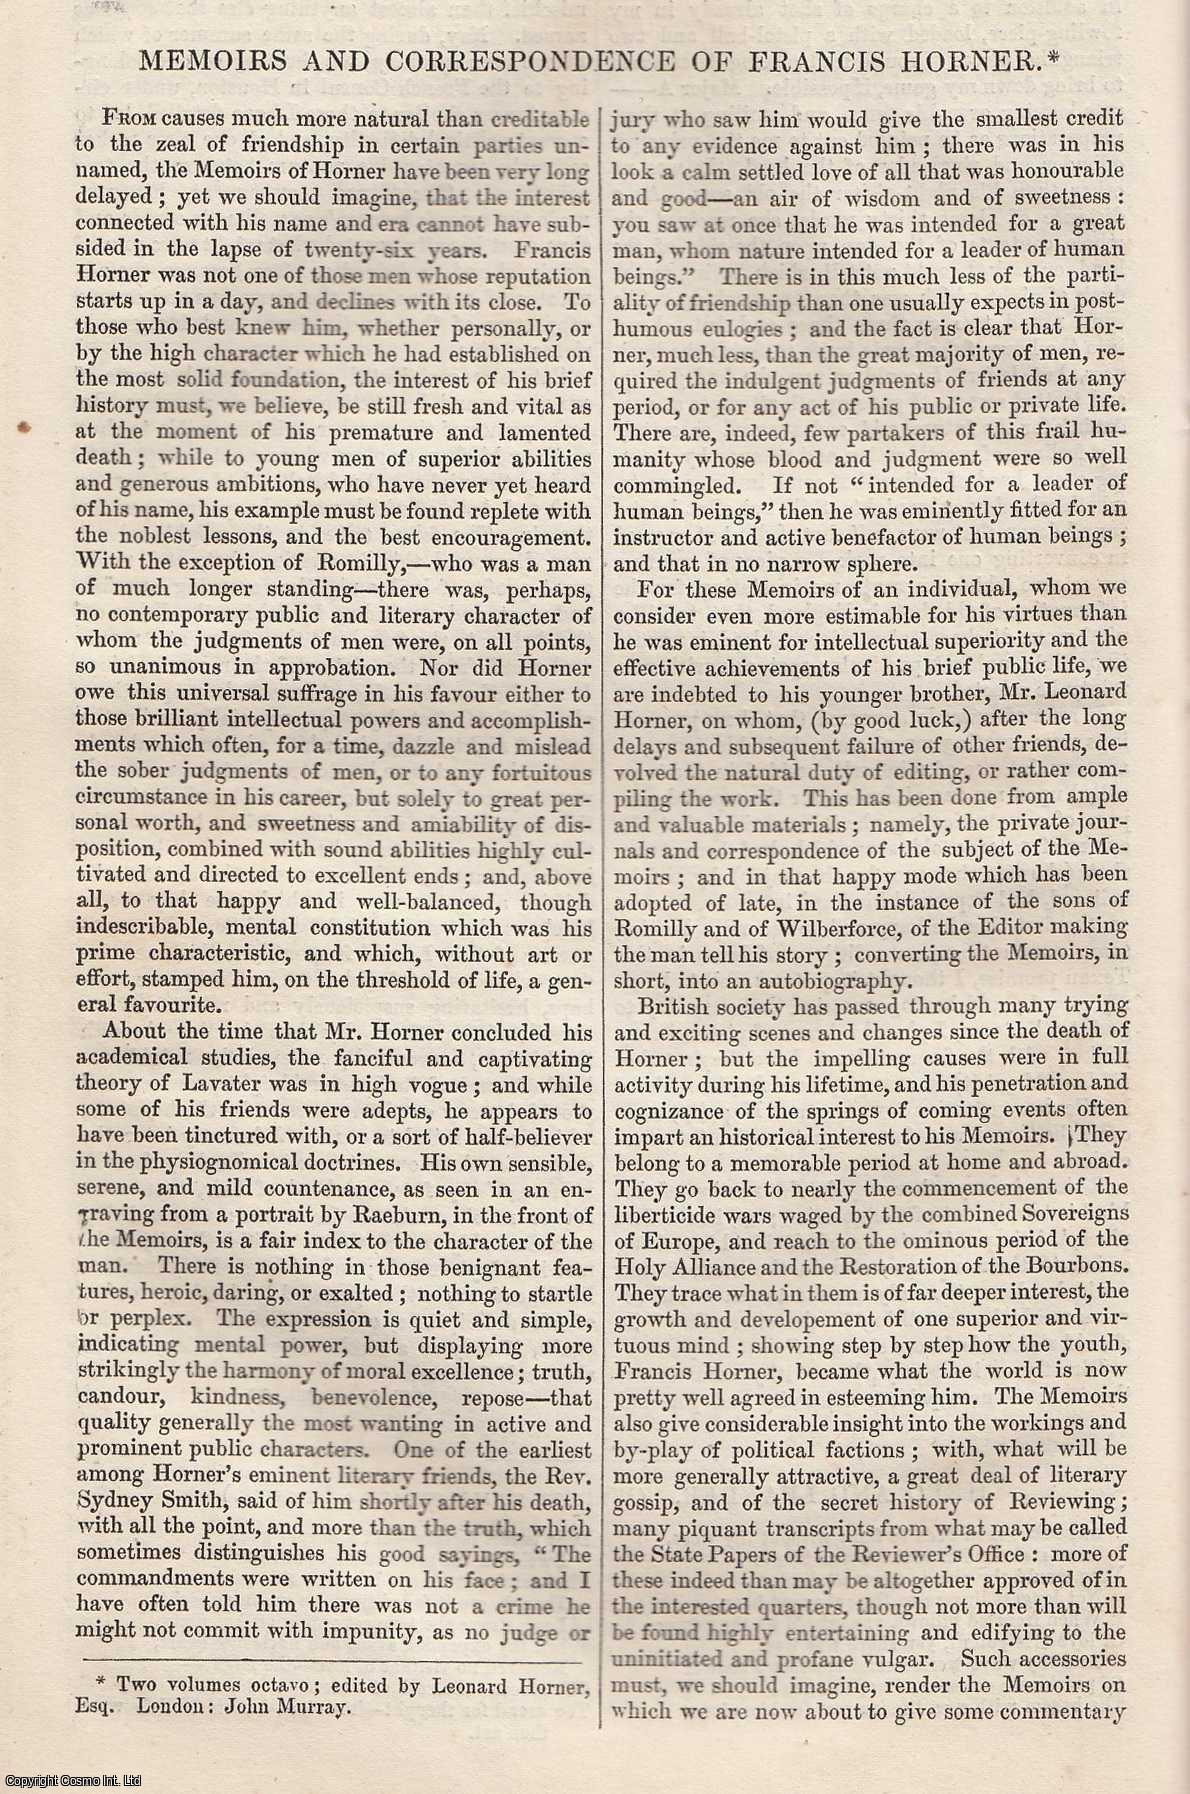 Johnstone, Christian - Memoirs and Correspondence of Francis Horner. An original article from Tait's Edinburgh Magazine, 1843.